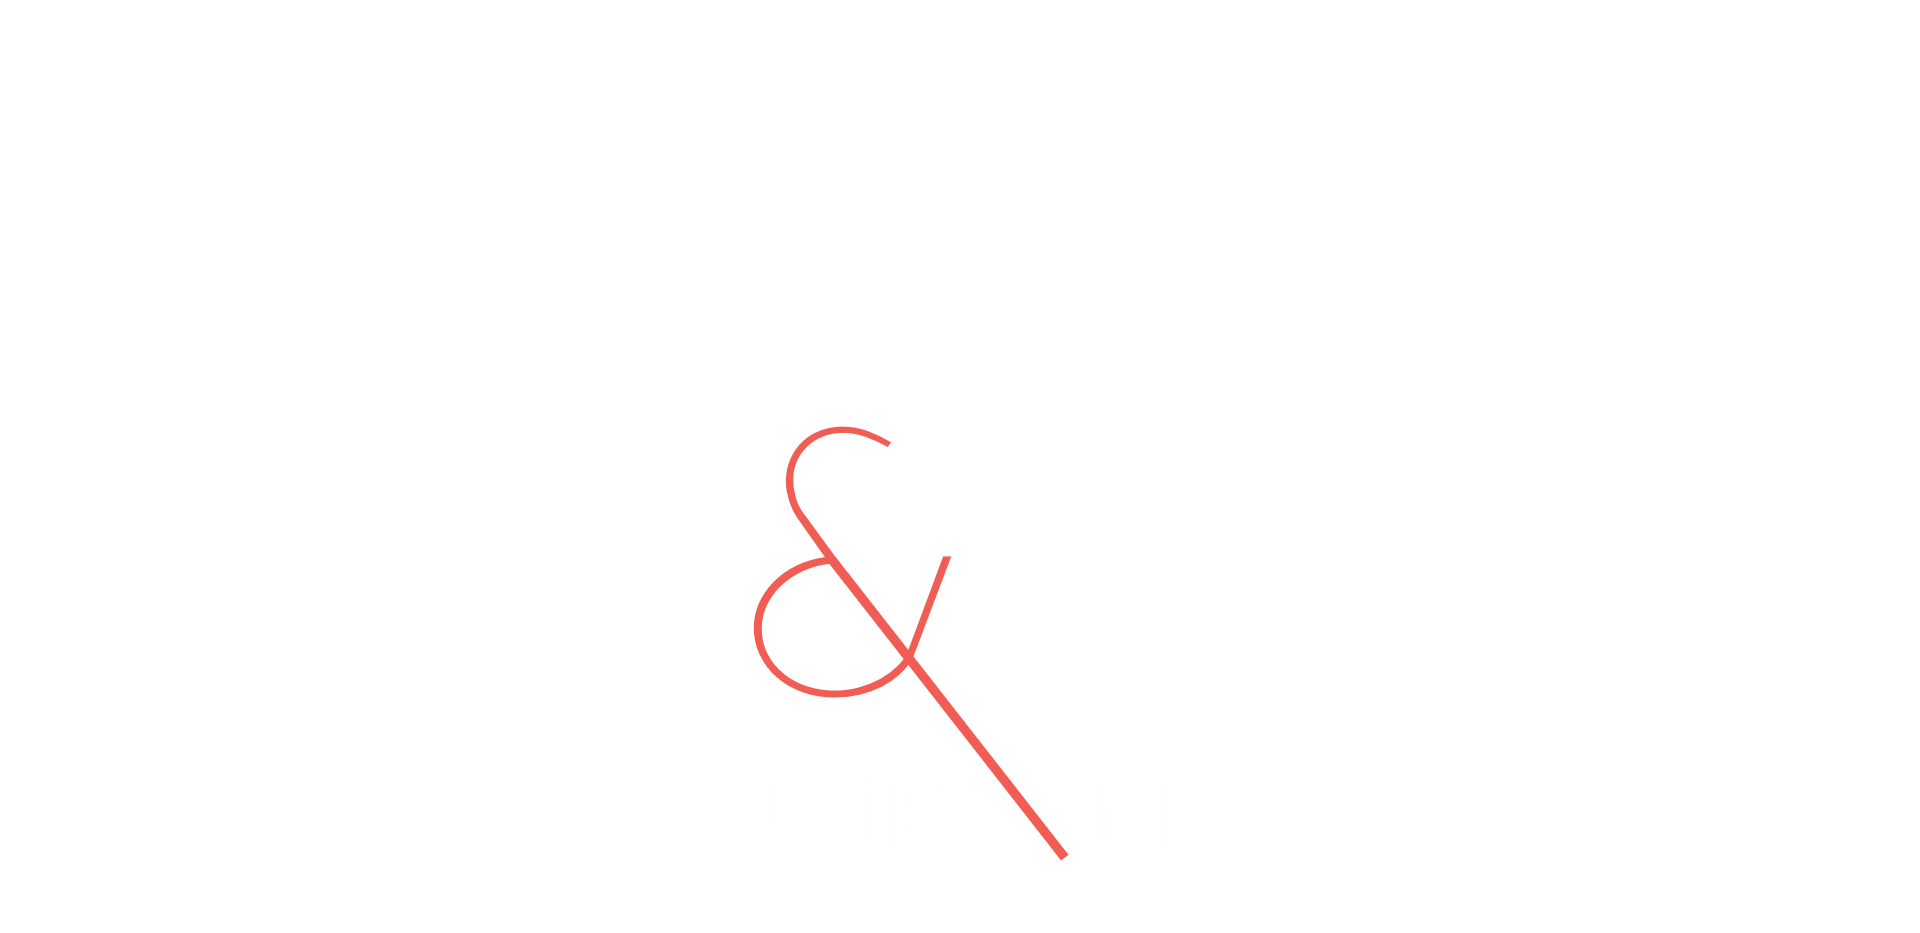 Coral Princess Hotel & Dive Resort Cozumel